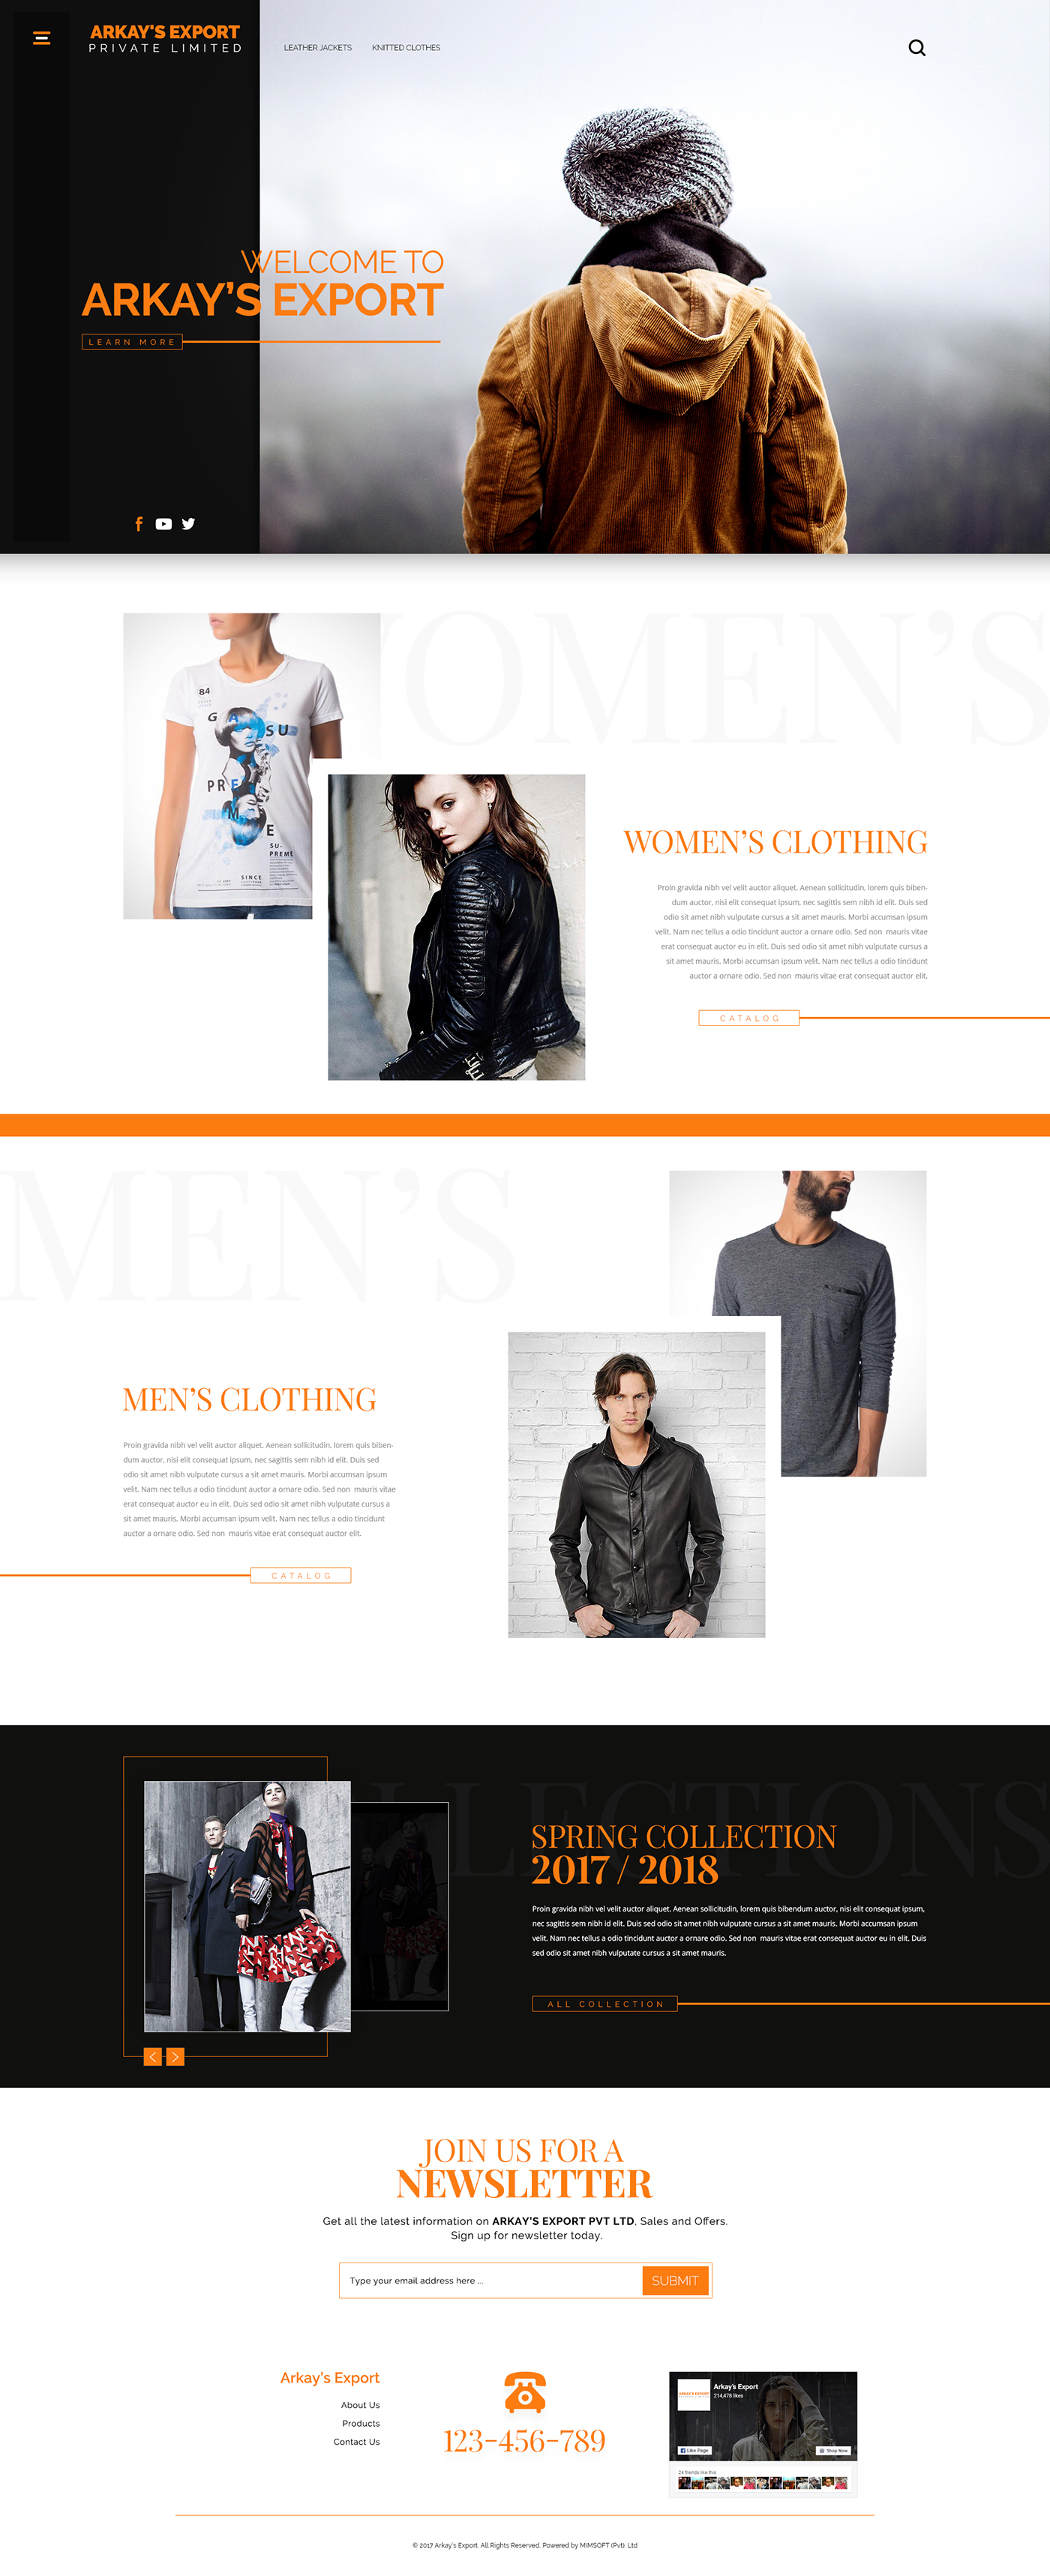 Web design graphic new leather jacket cloth black orange